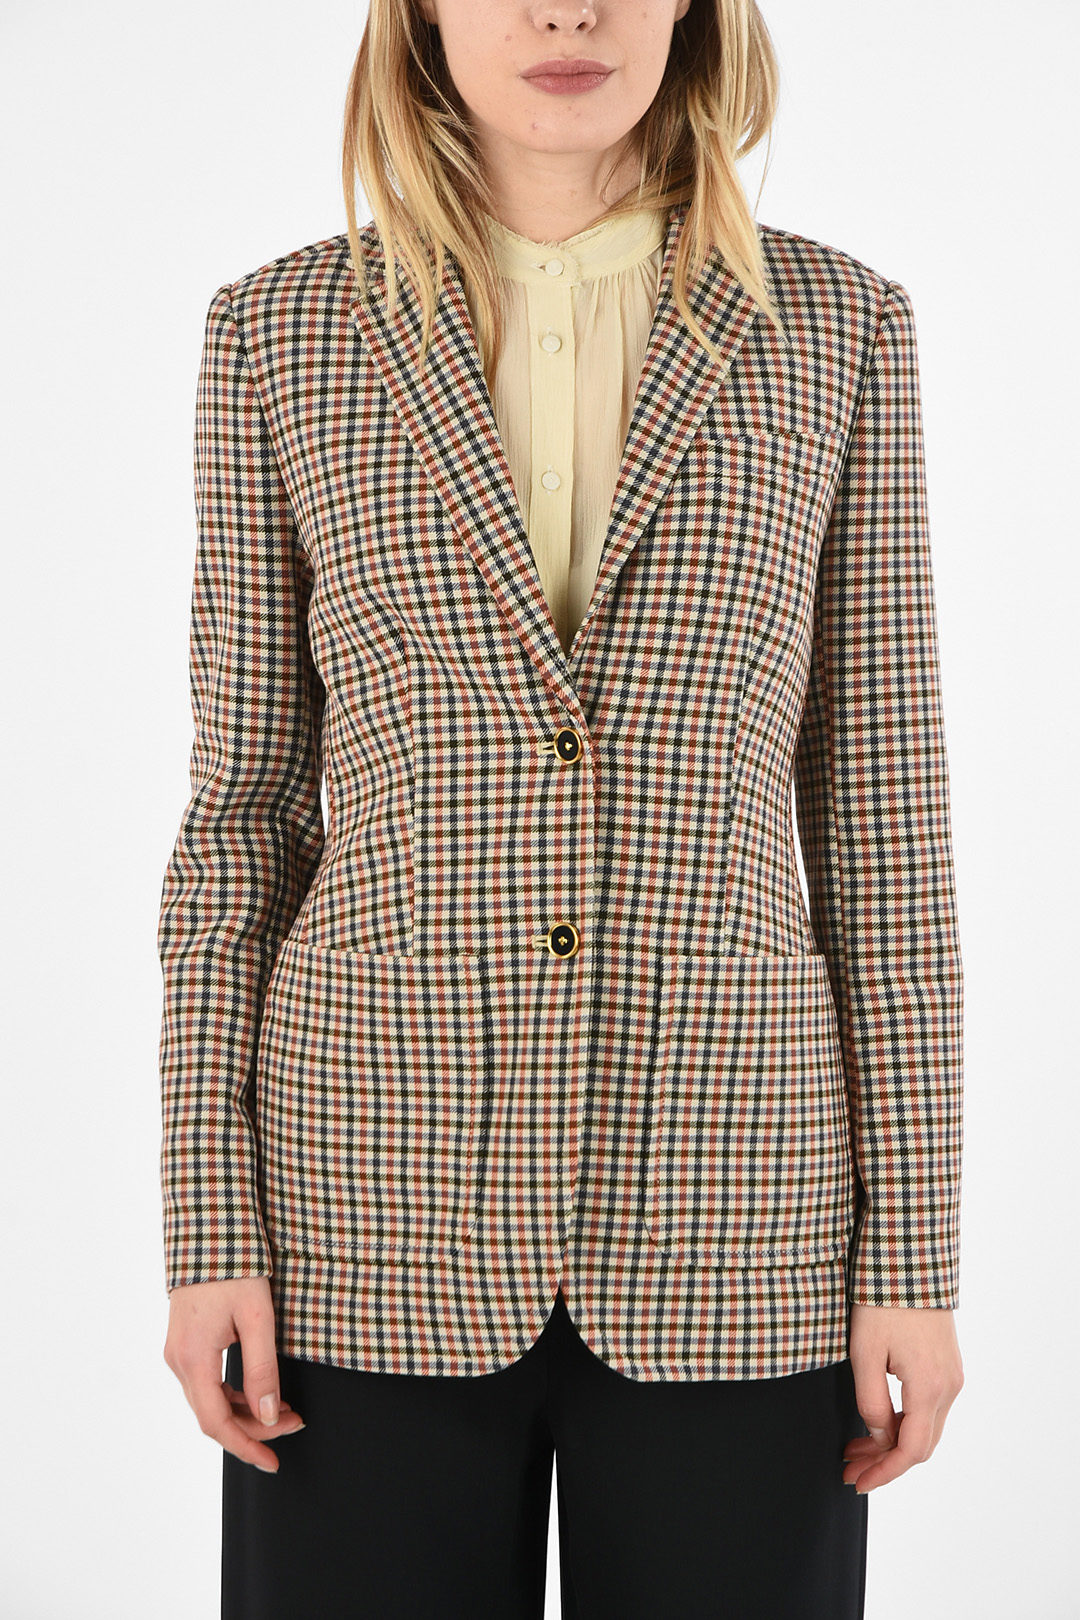 Tory Burch shephard's check side vents 2-button blazer women - Glamood  Outlet